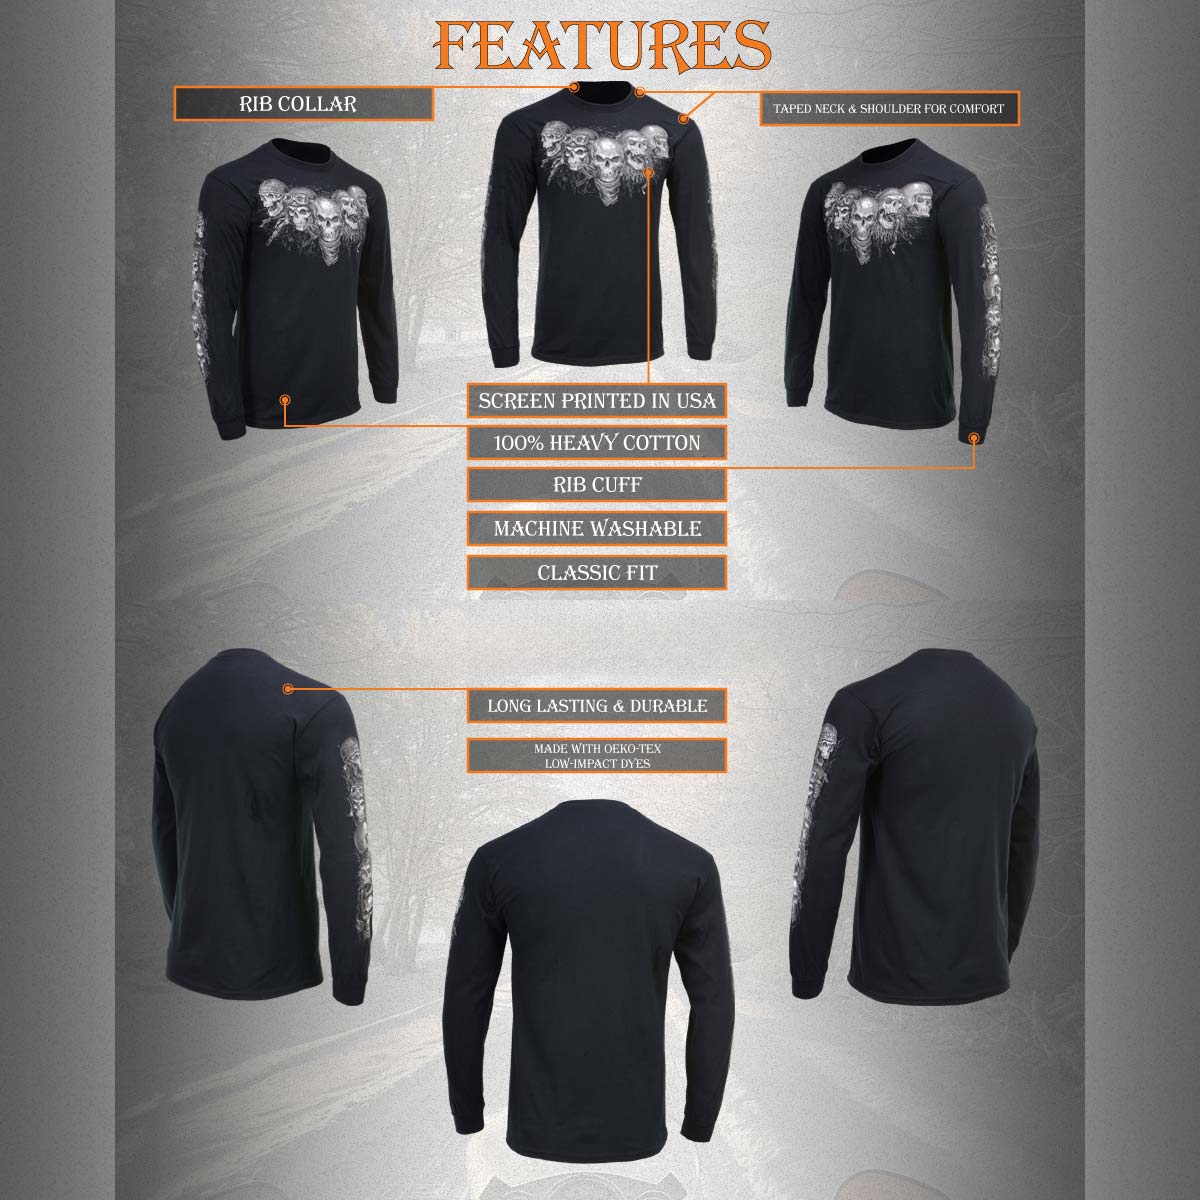 Milwaukee Leather MPMH117008 Men’s ‘Five Skulls’ Long Sleeve Black T-Shirt